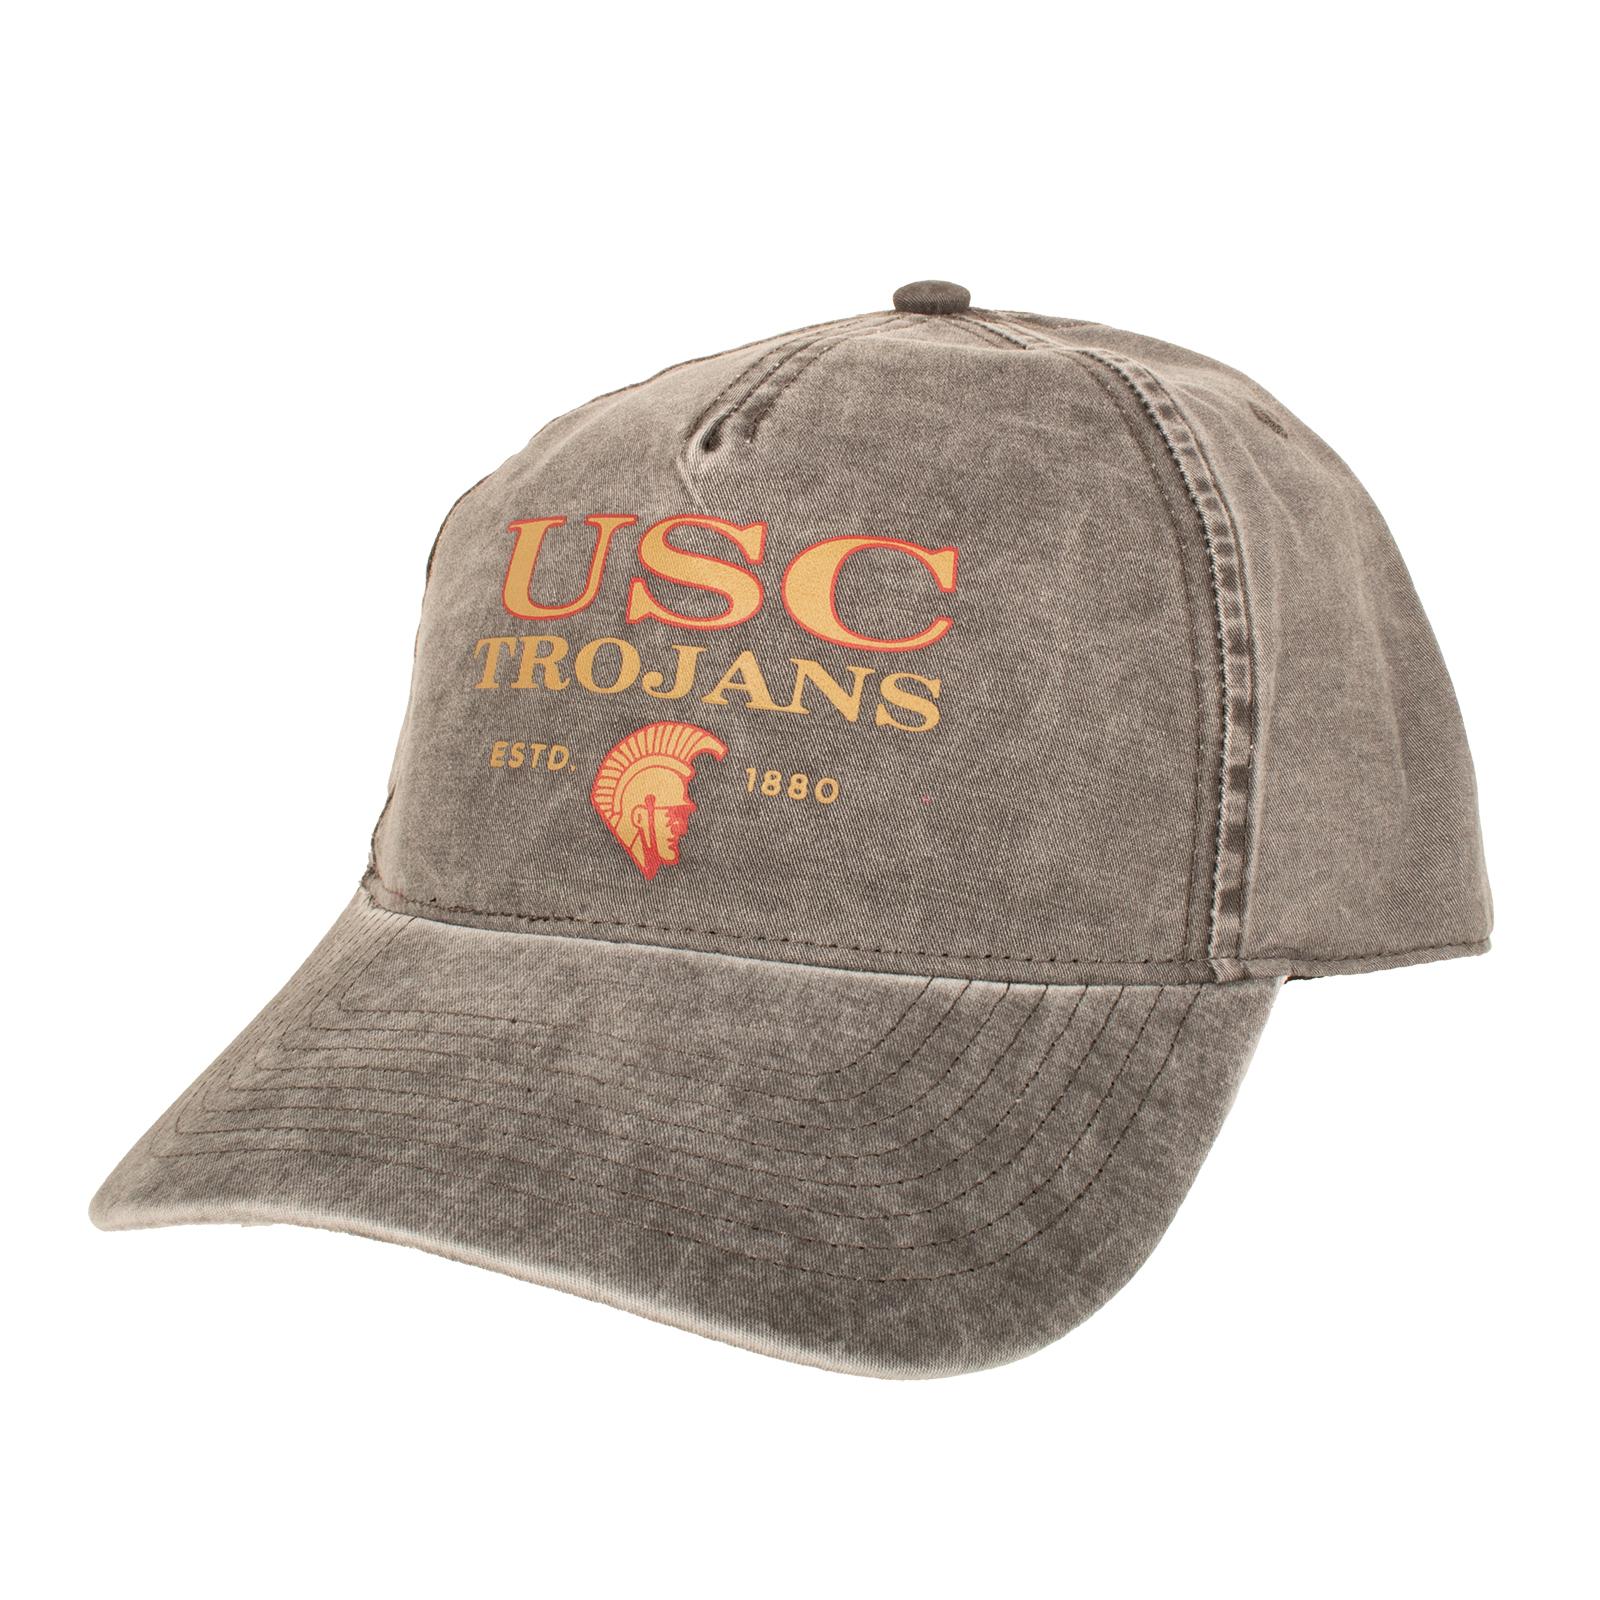 USC Trojans Unisex Trailhead Snap Back Hat Charcoal image01